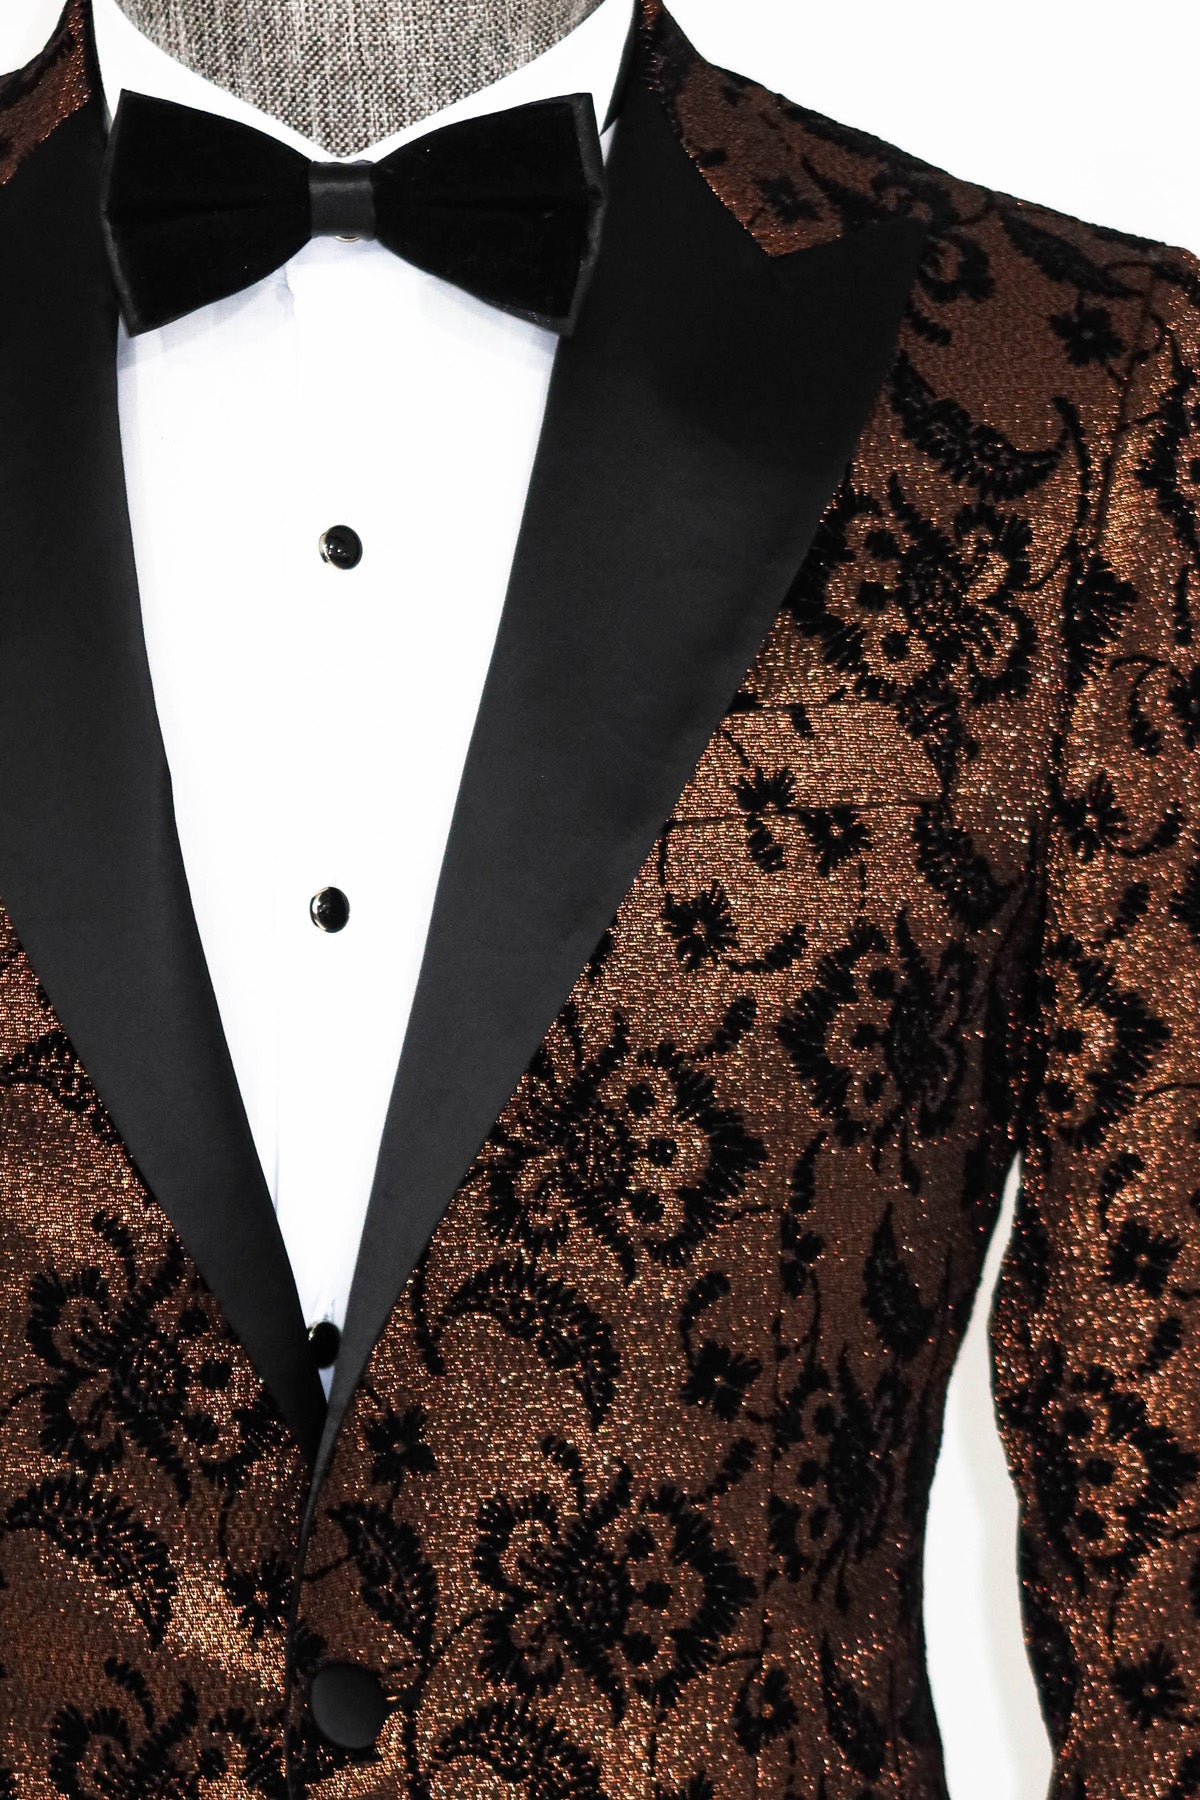 KCT Menswear - Men's Rose Brown Sparkle Prom Blazer with Black Floral Design